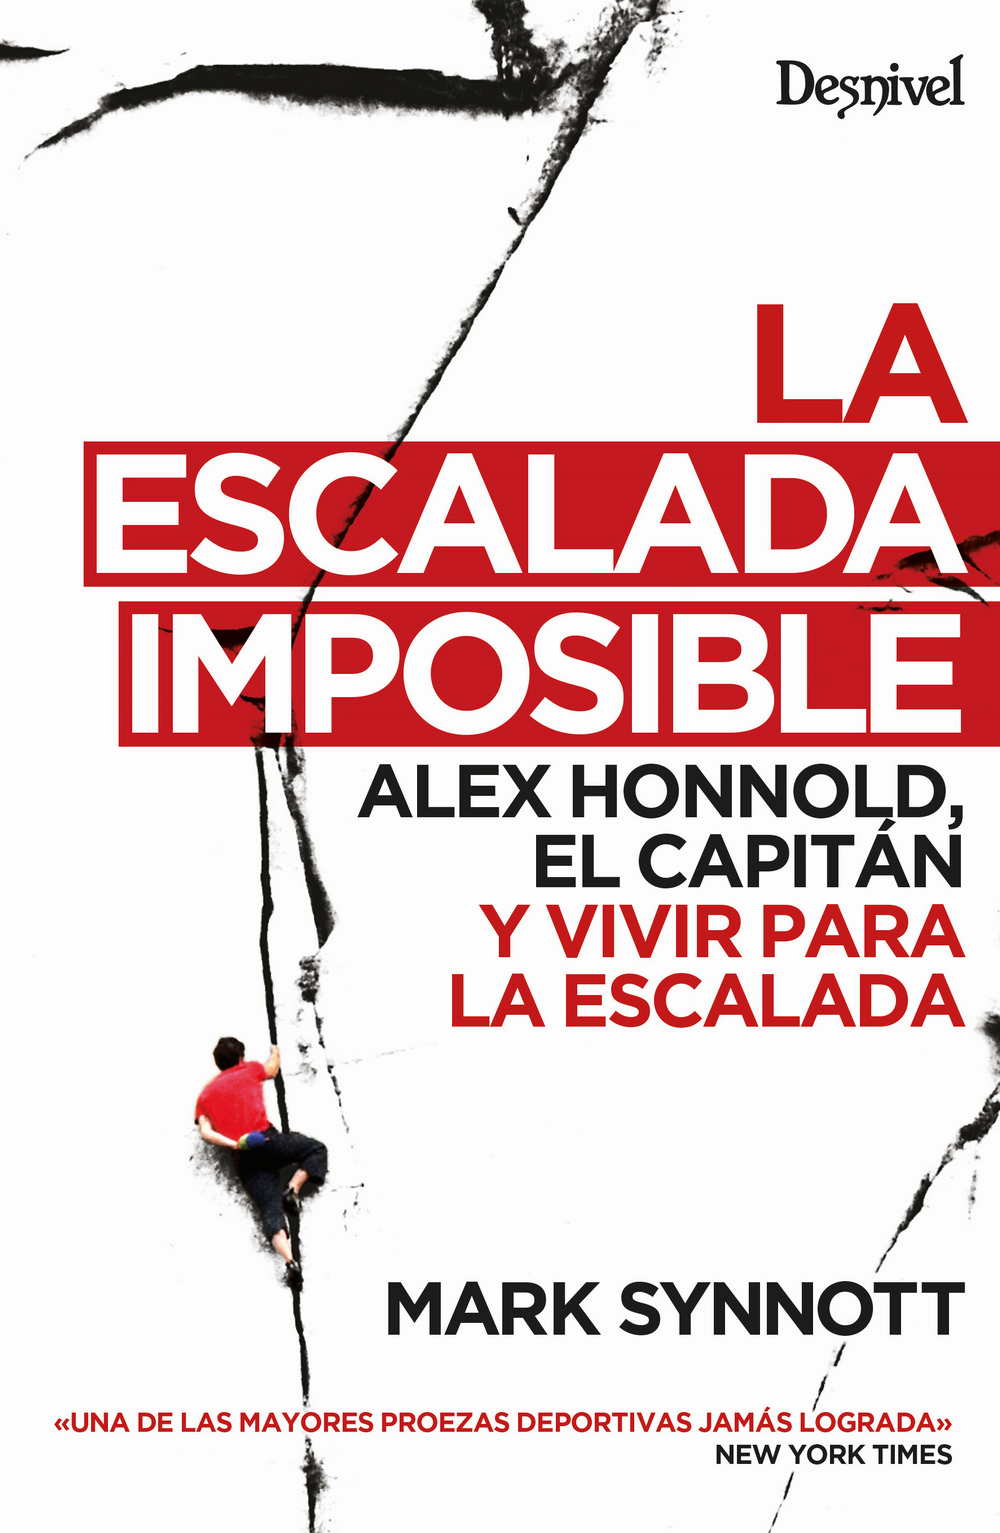 Oferta prepublicación "La escalada imposible" por Mark Synnott